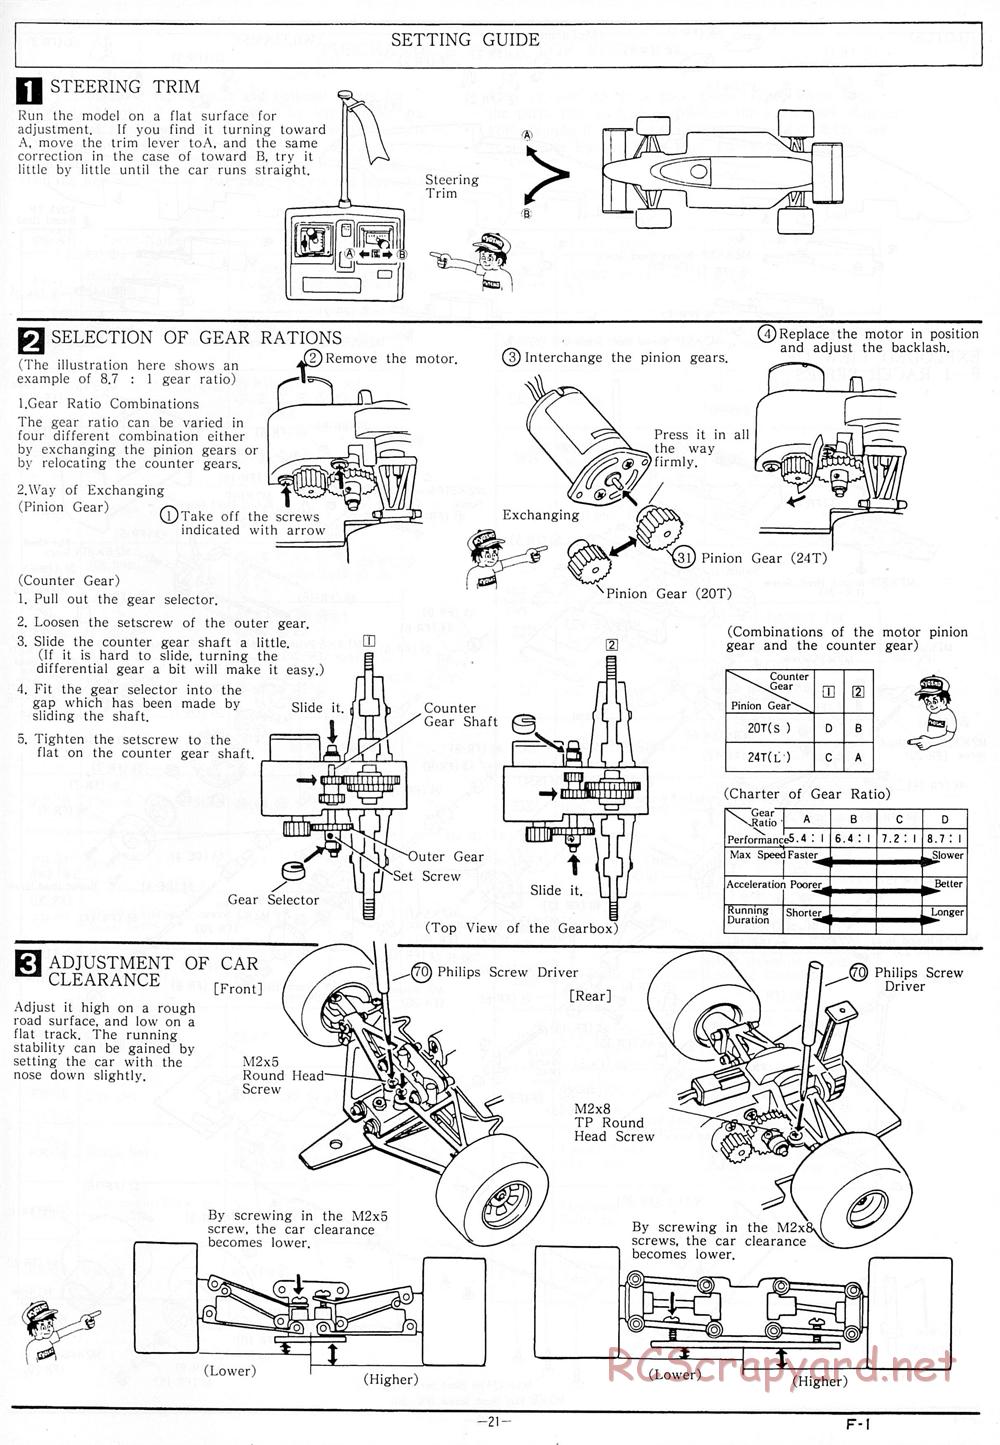 Kyosho - 1/18 Scale Formula One (F1) - Manual - Page 21